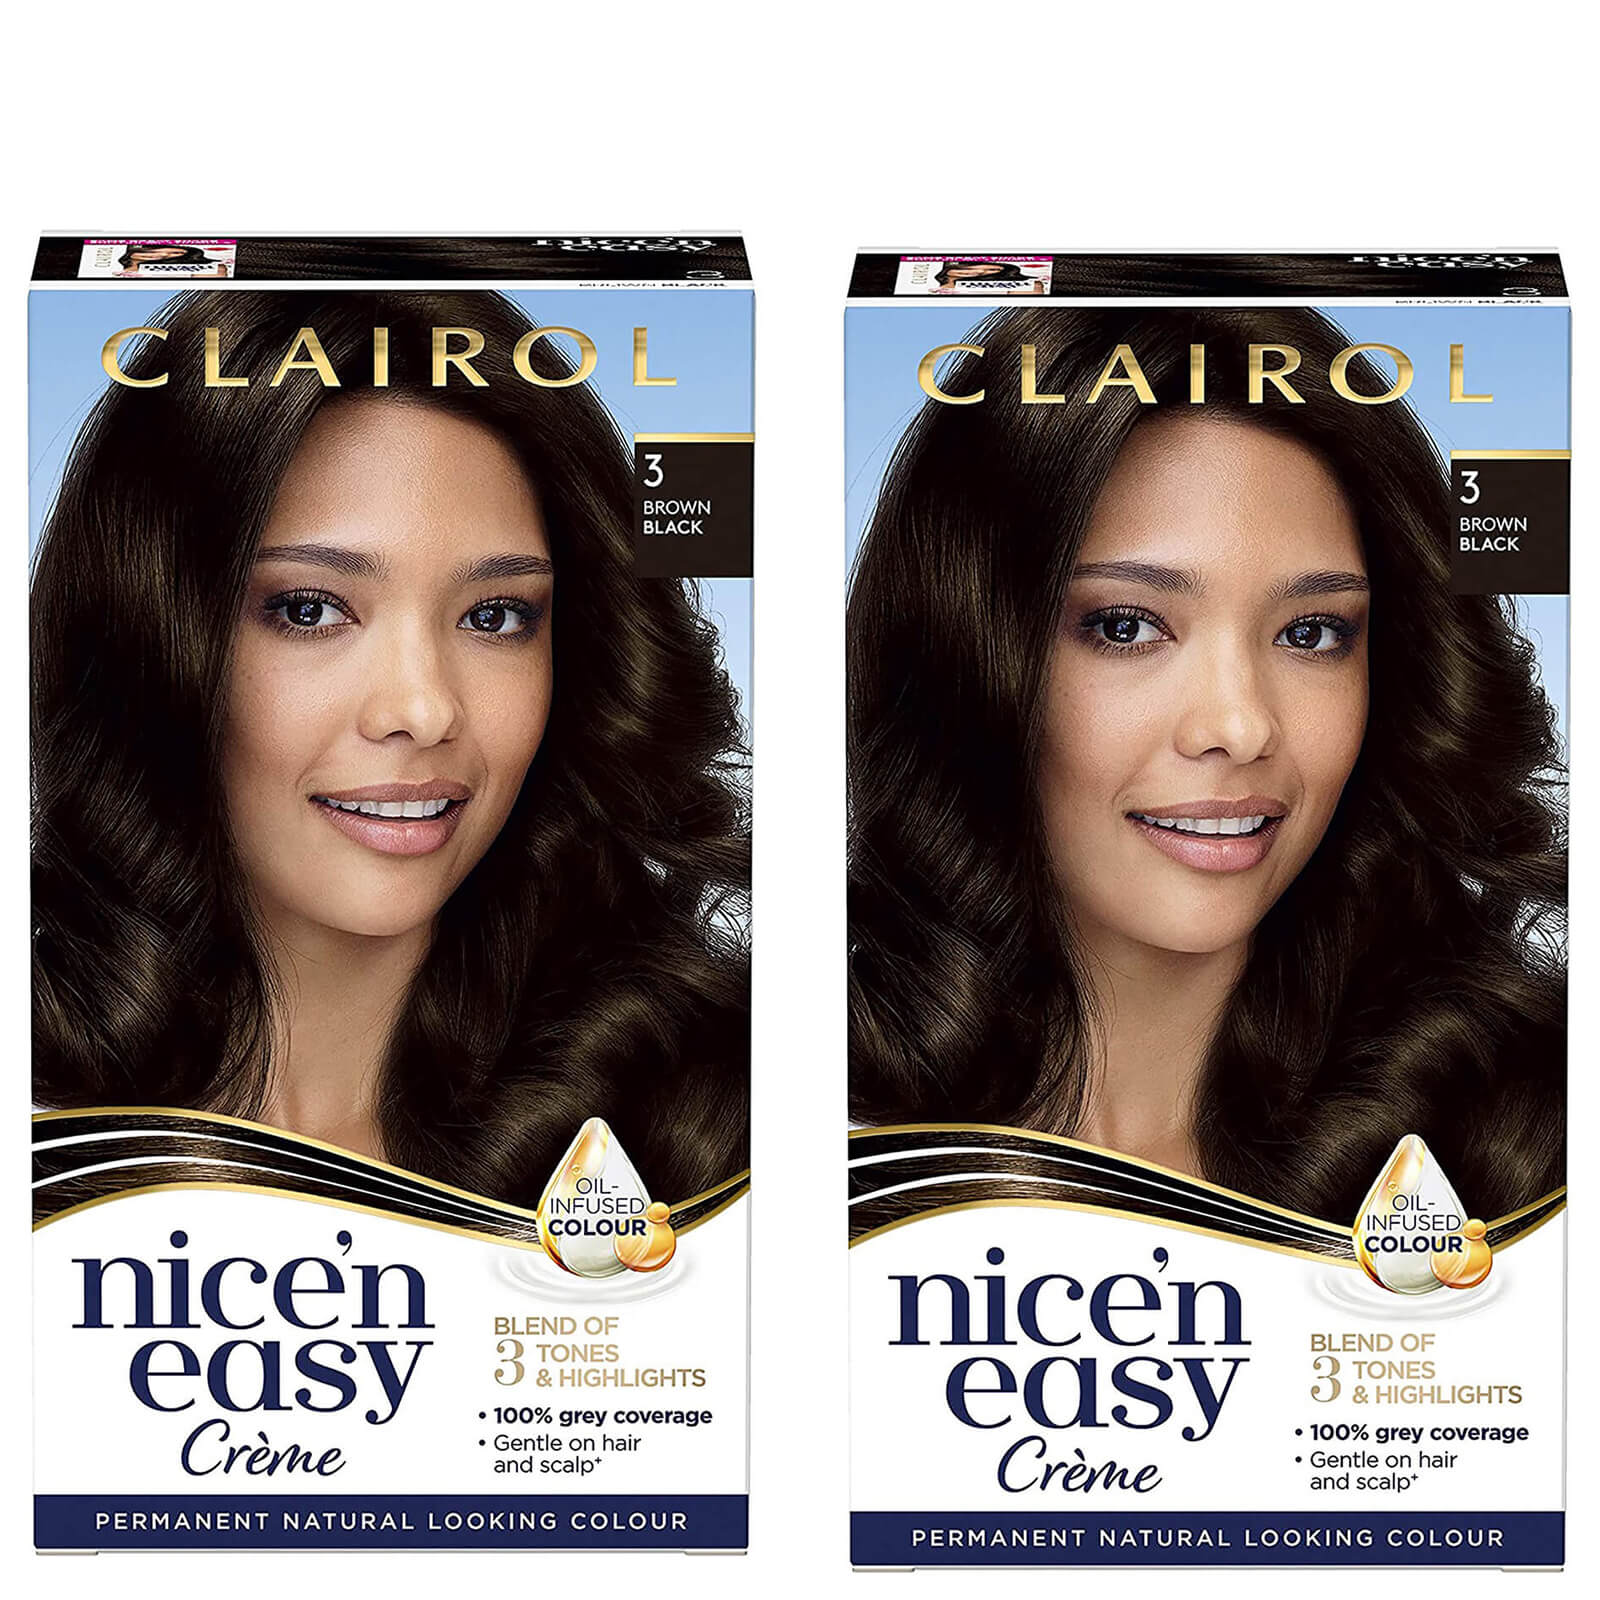 Clairol Nice' n Easy Crème Natural Looking Oil Infused Permanent Hair Dye Duo (Various Shades) - 3 Brown Black